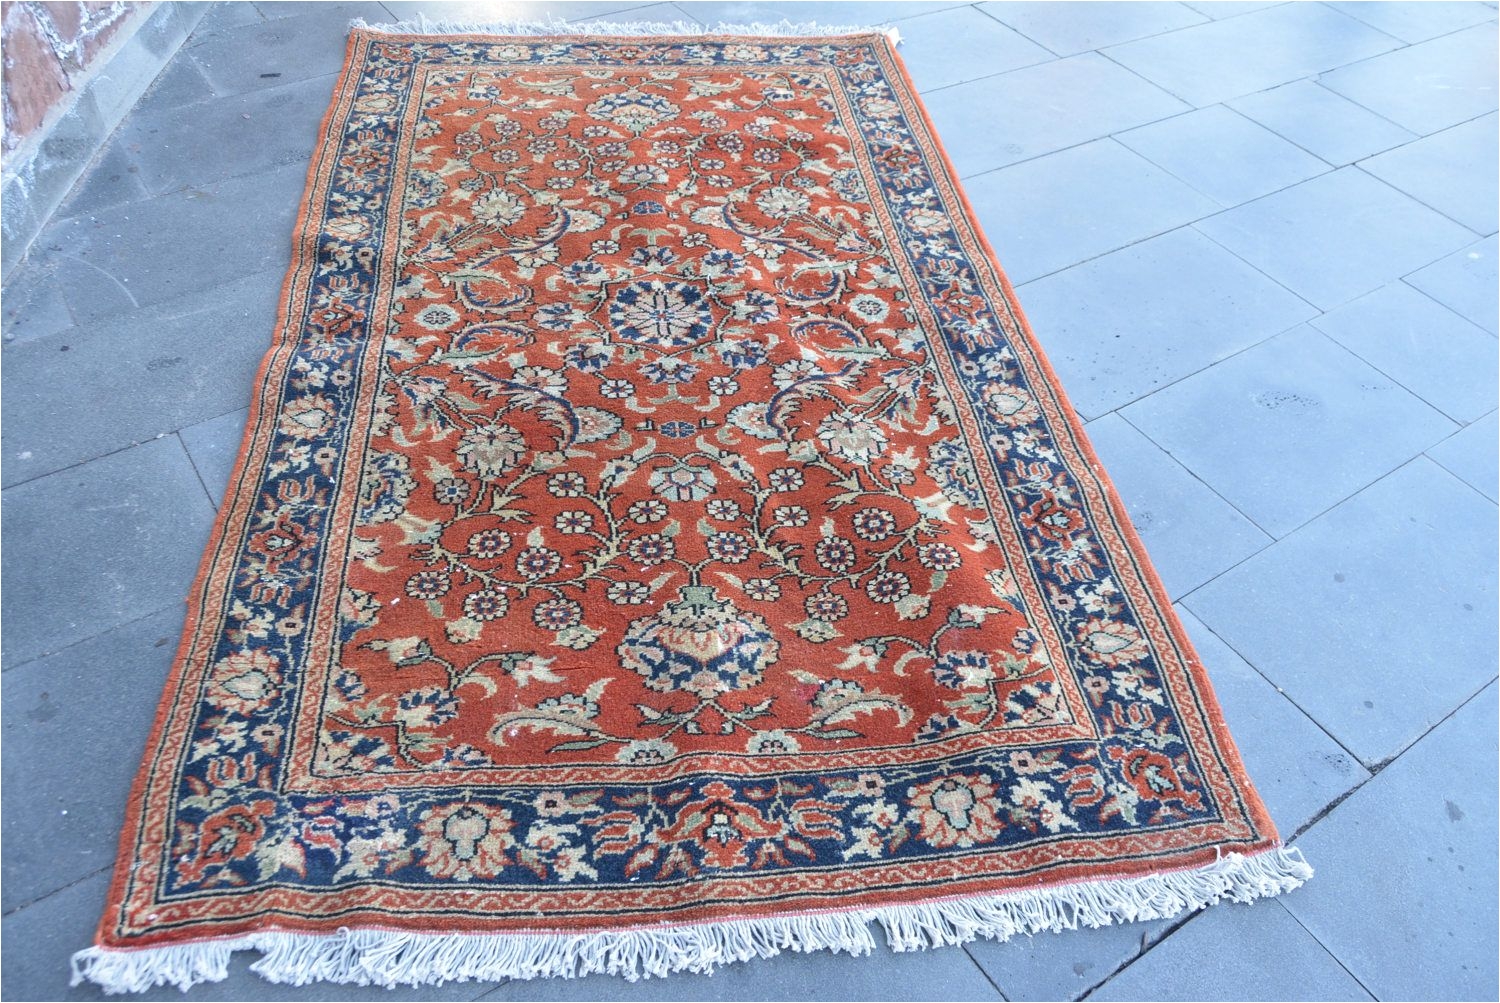 flower pattern vintage oushak rug red and blue colors oushak rug free shipping vintage turkish rug 3 x 3 7 turkish rug code 2